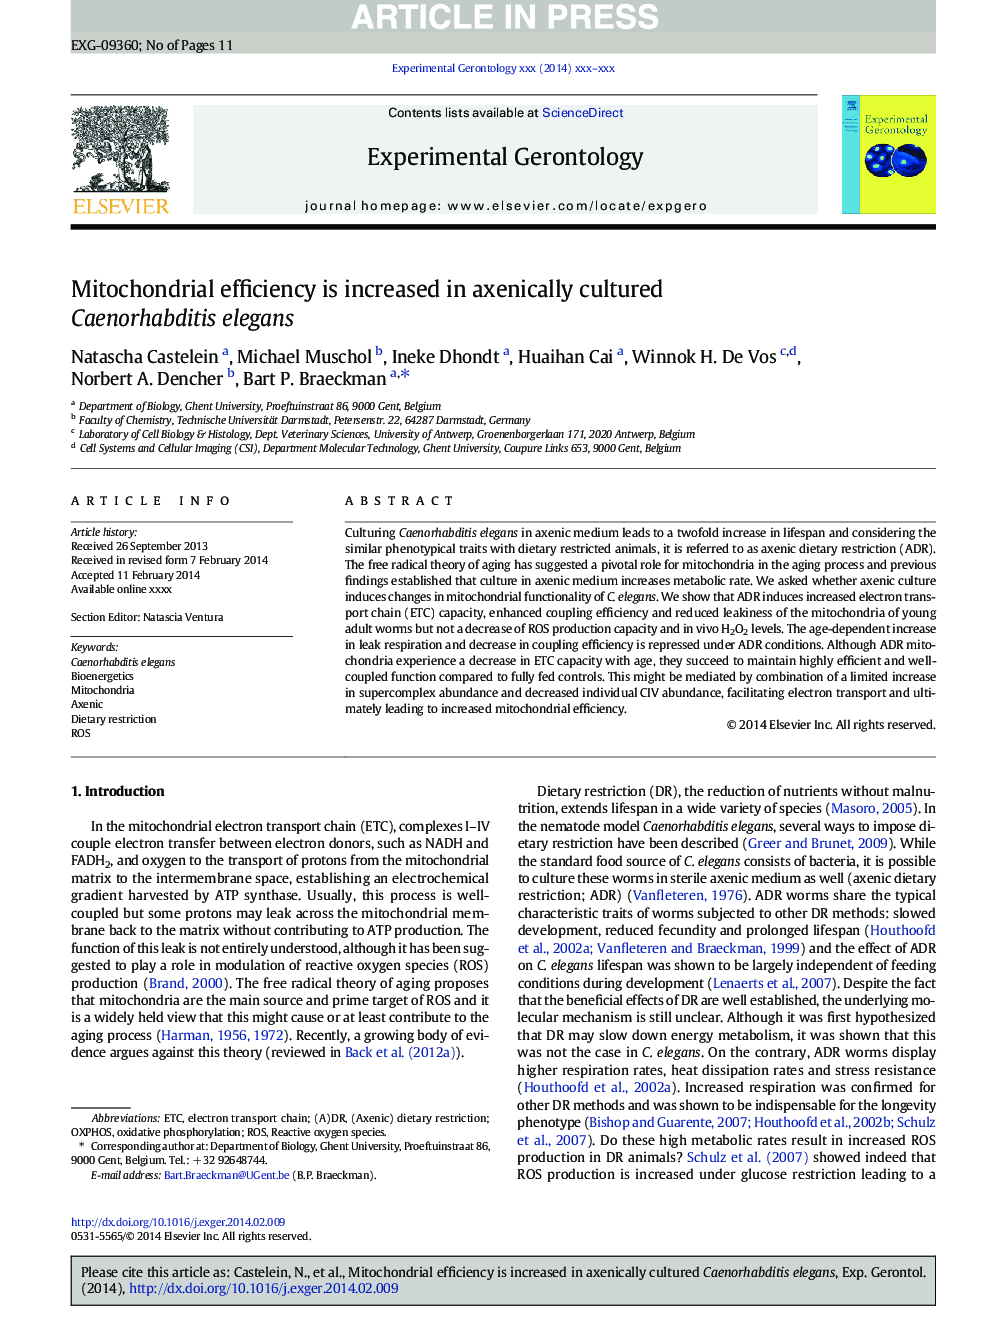 Mitochondrial efficiency is increased in axenically cultured Caenorhabditis elegans